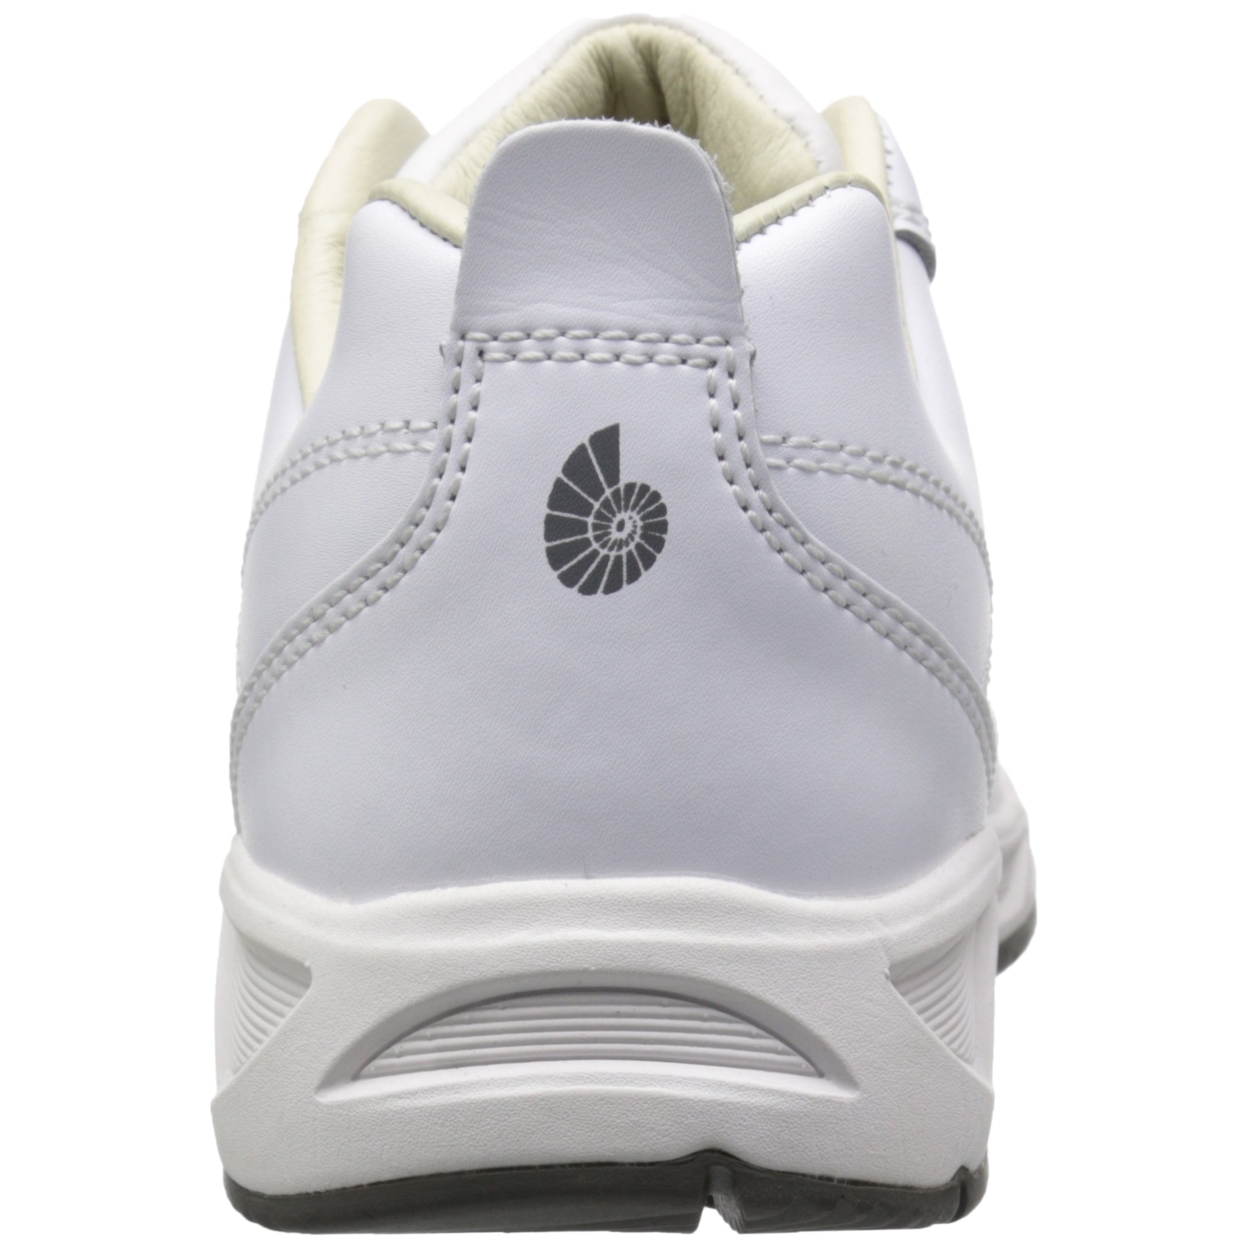 FSI FOOTWEAR SPECIALTIES INTERNATIONAL NAUTILUS Nautilus 4046 ESD No Exposed Metal Soft Toe Clean Room Athletic Shoe WHITE - WHITE, 6.5-M